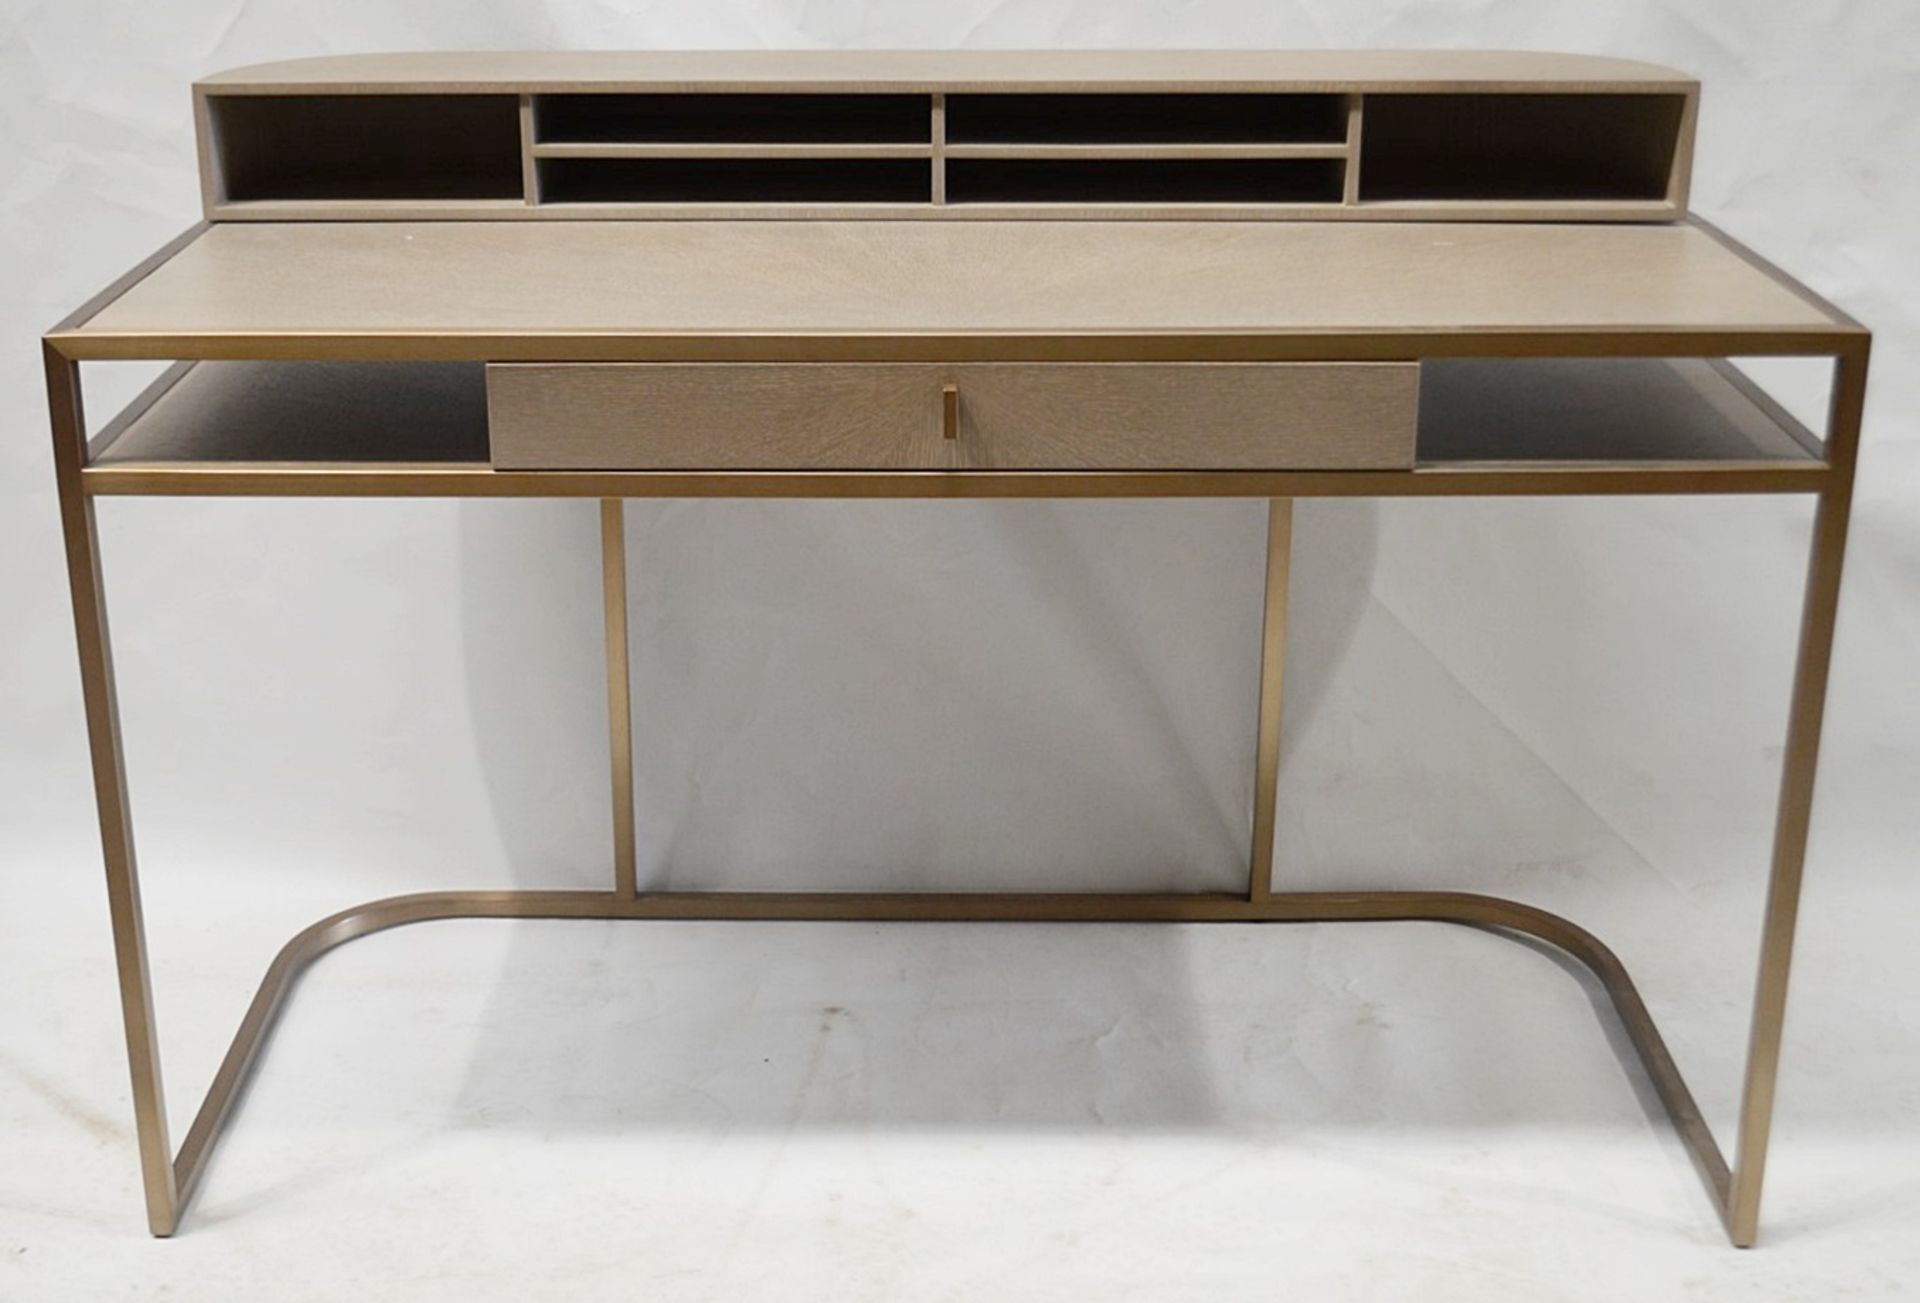 1 x EICHHOLTZ 'Highland' Designer Desk With Washed Oak And Brushed Brass Finishes - Ex-Display - - Image 8 of 12